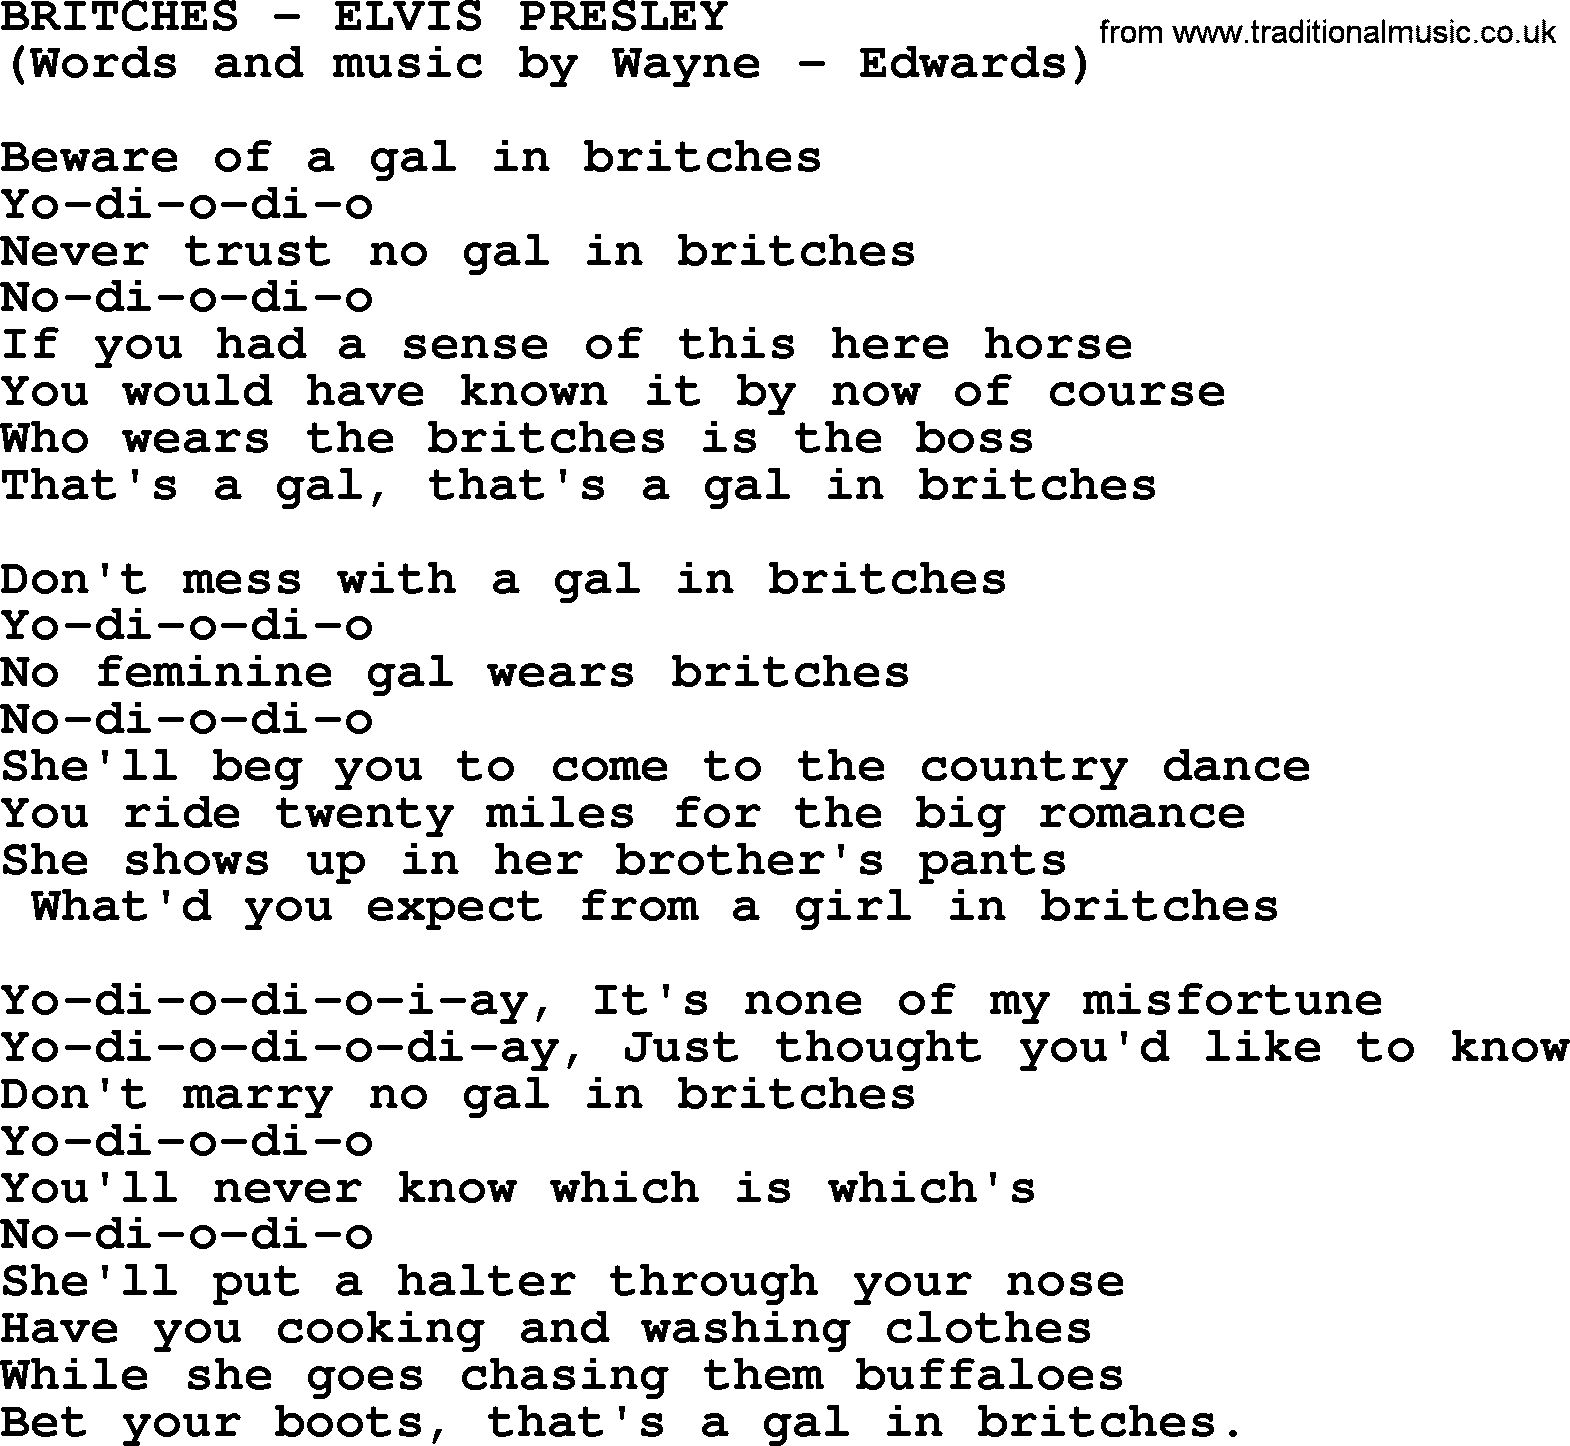 Elvis Presley song: Britches lyrics